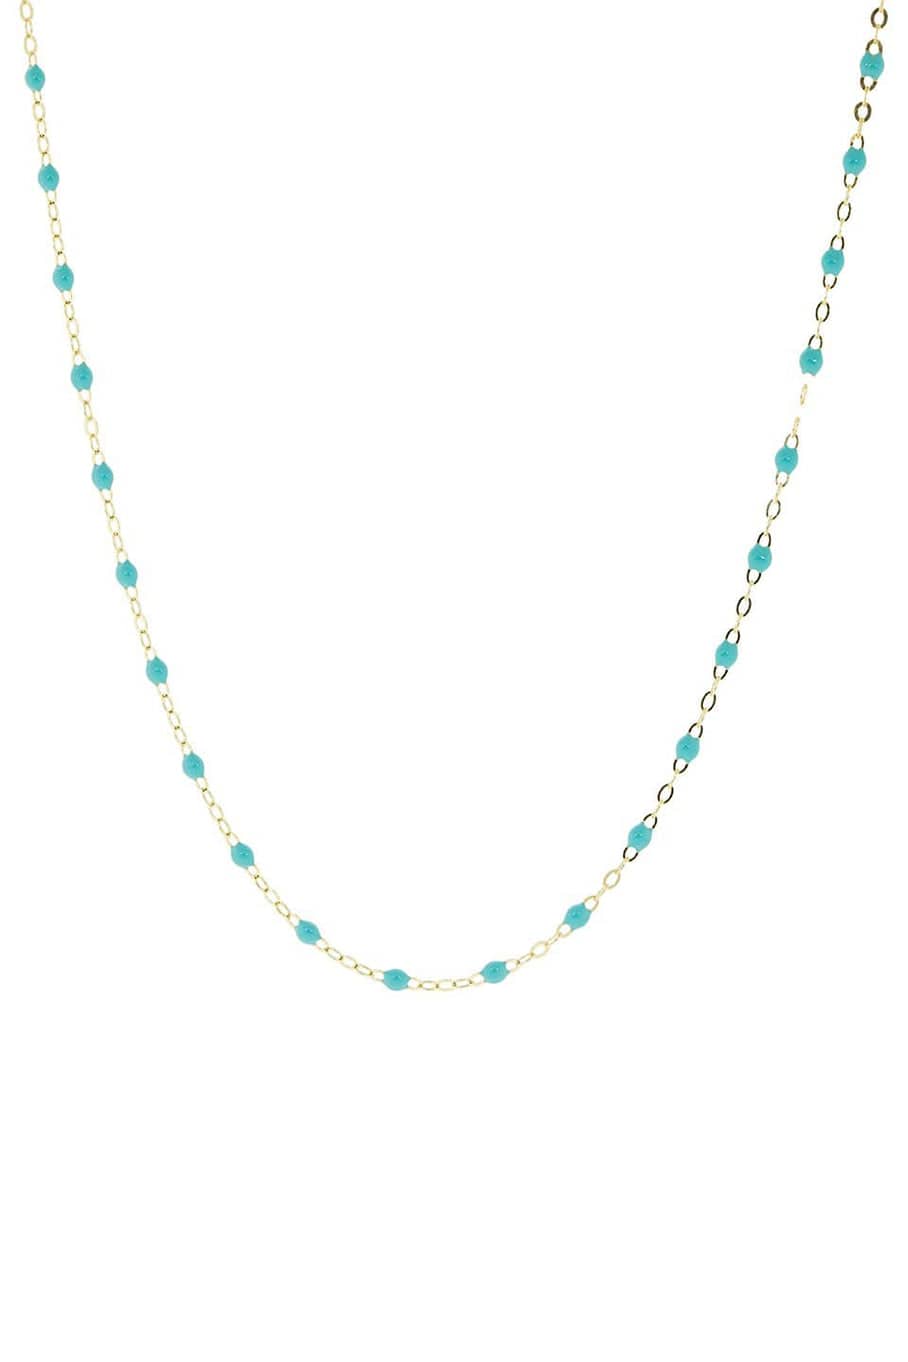 GIGI CLOZEAU-Turquoise Bead Classic Gigi Sautoir Necklace-YG/TURQ